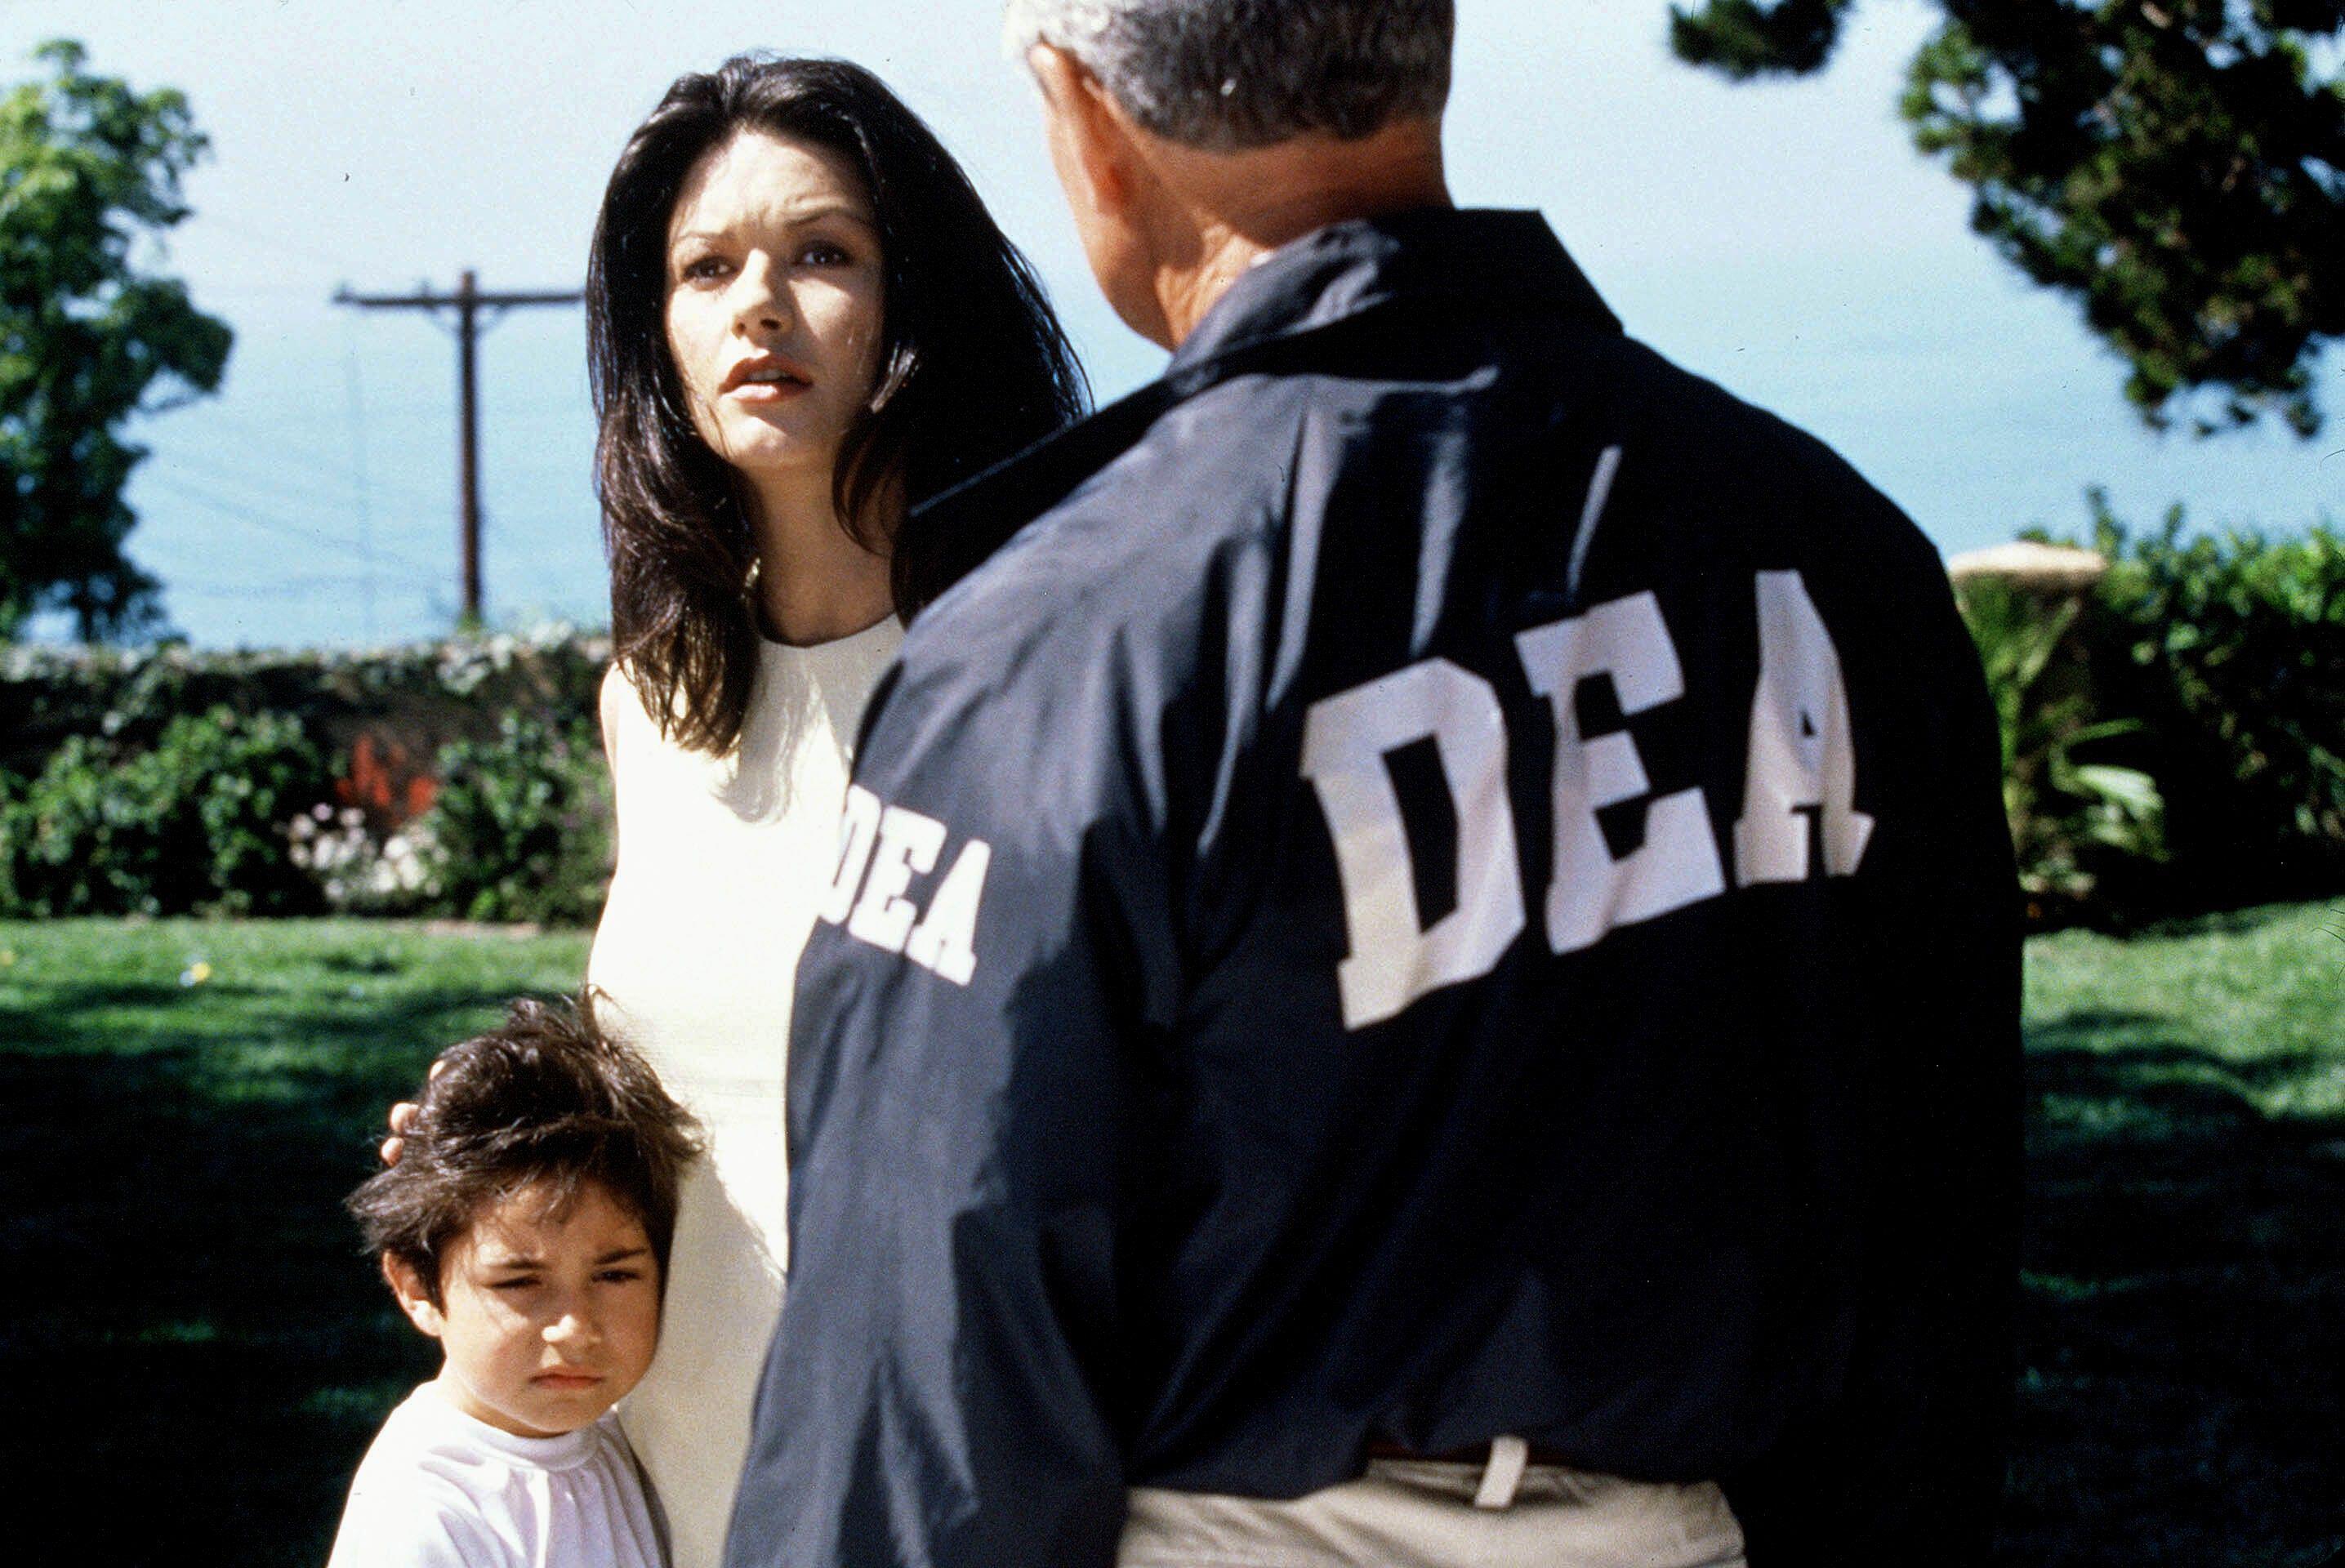 Catherine Zeta-Jones as Helena Ayala, who is held back by DEA agents in Traffic